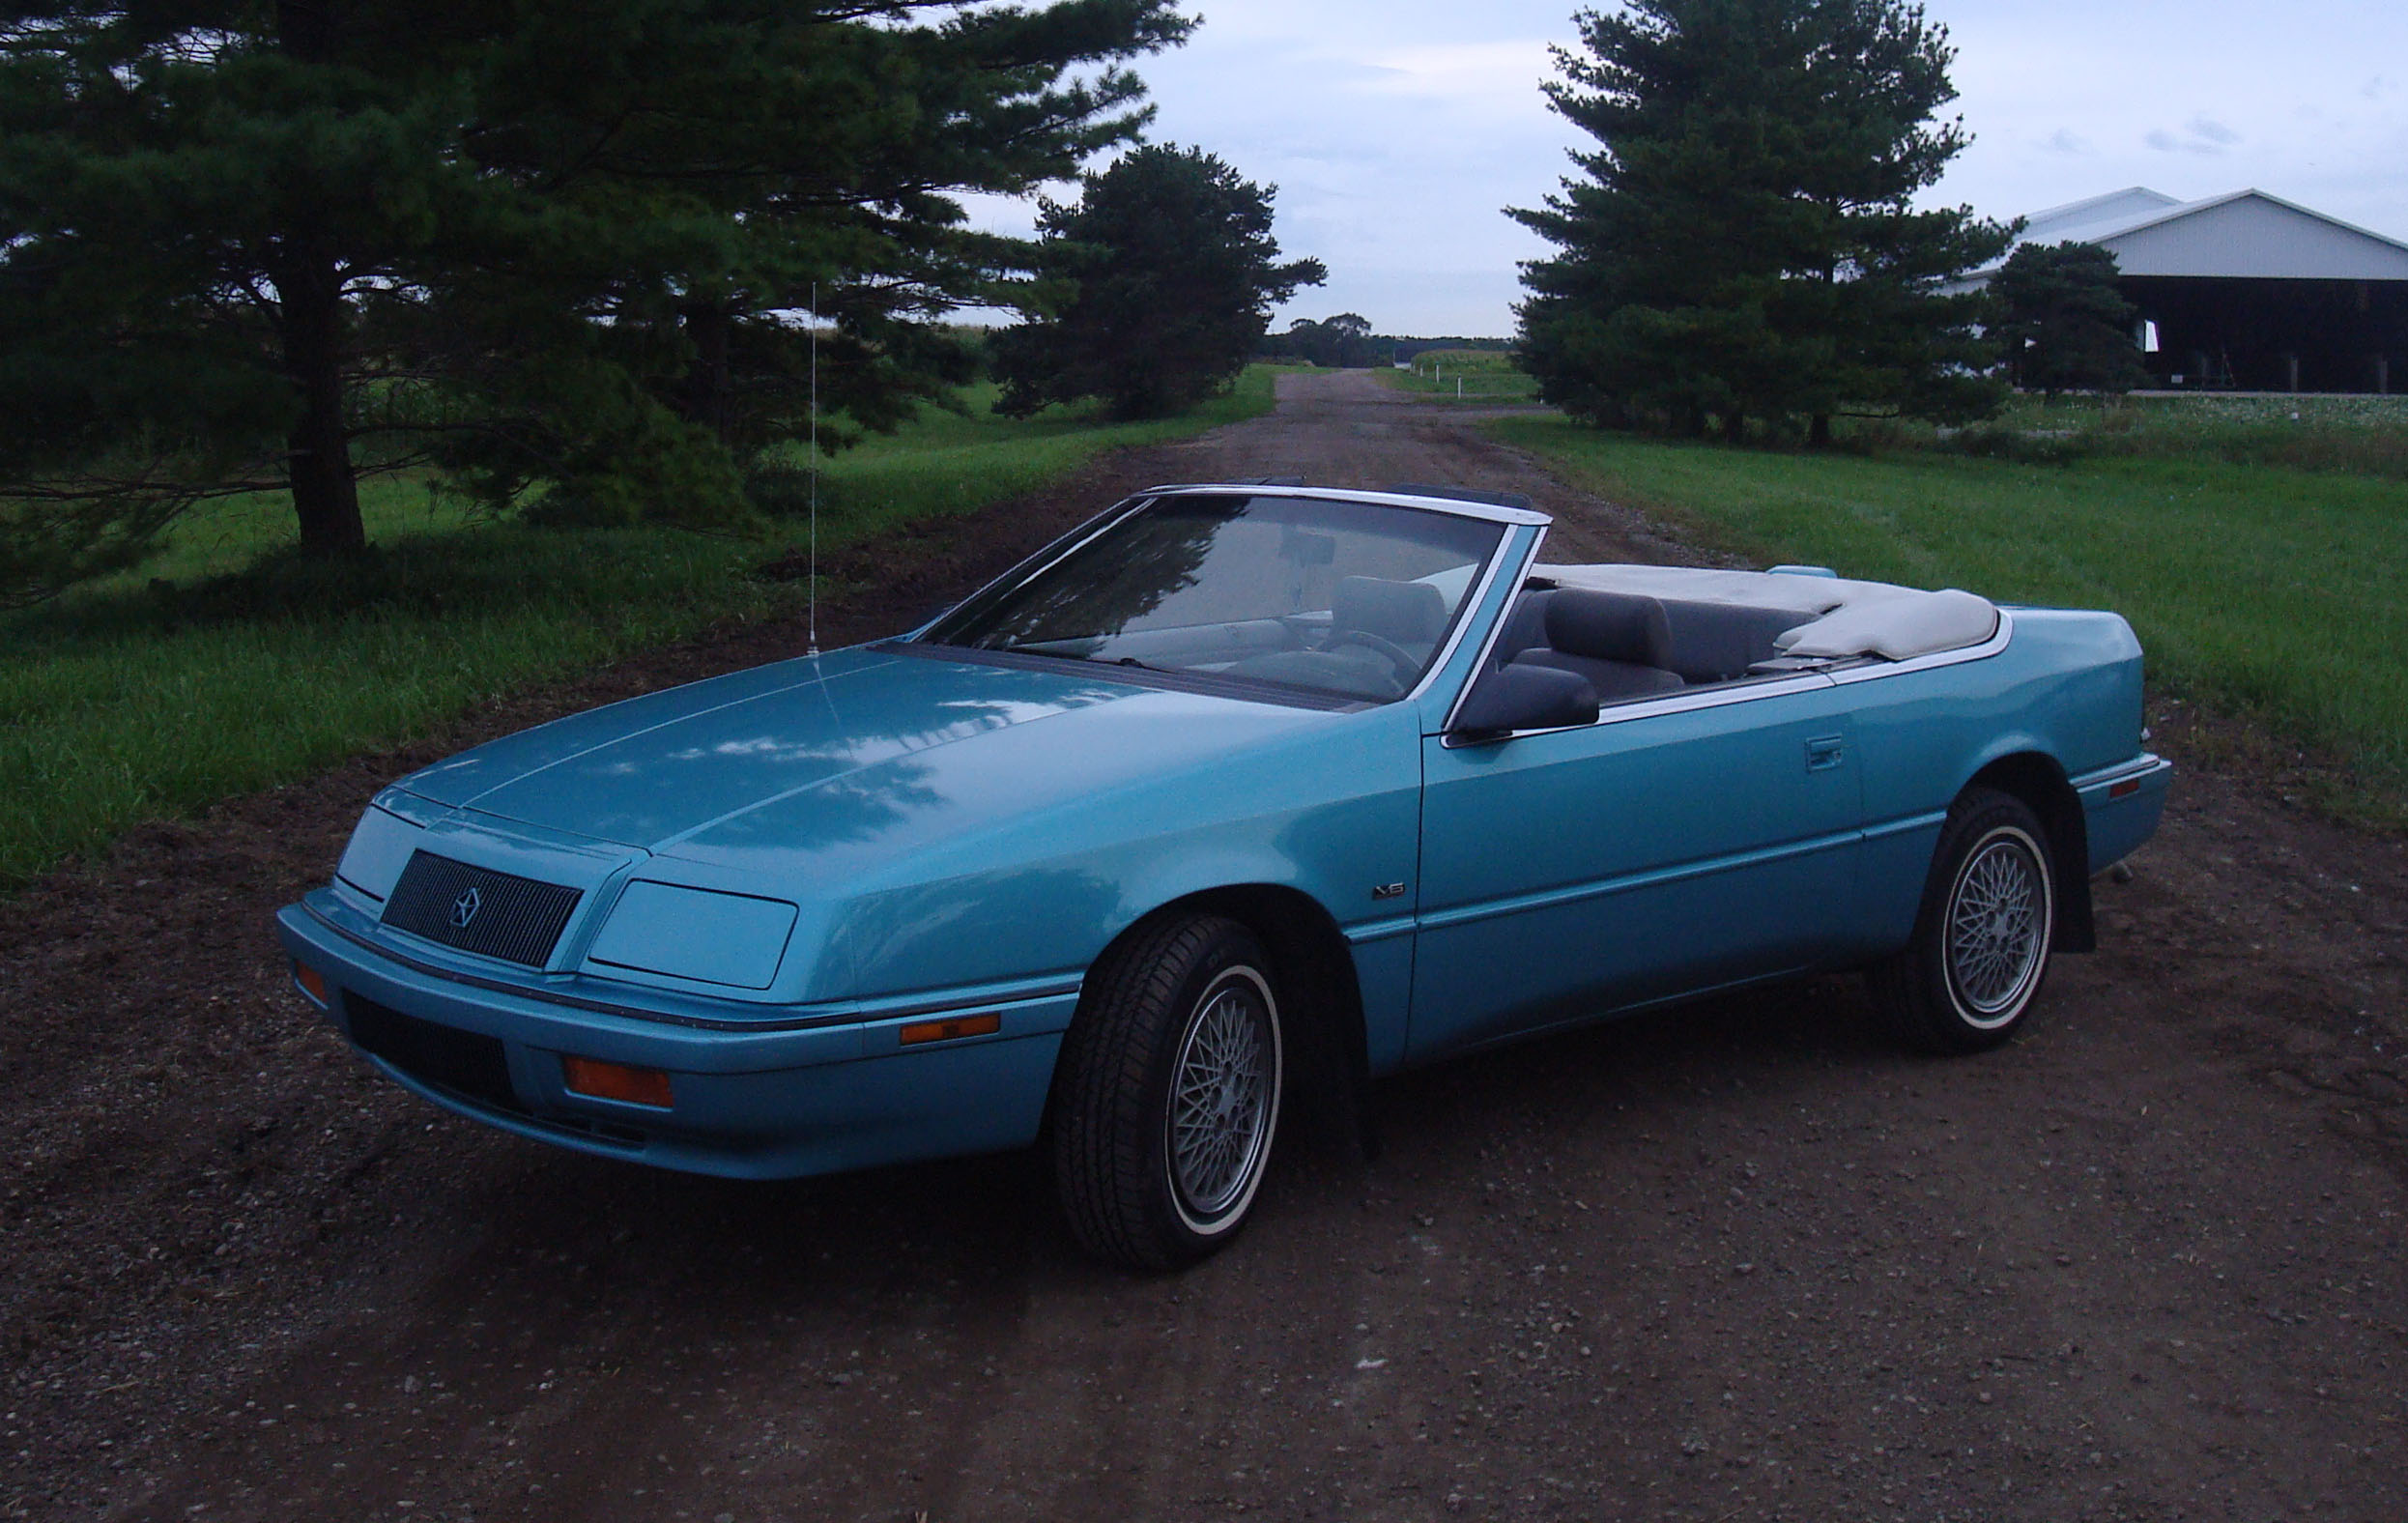 1992 Chrysler lebaron gtc #1